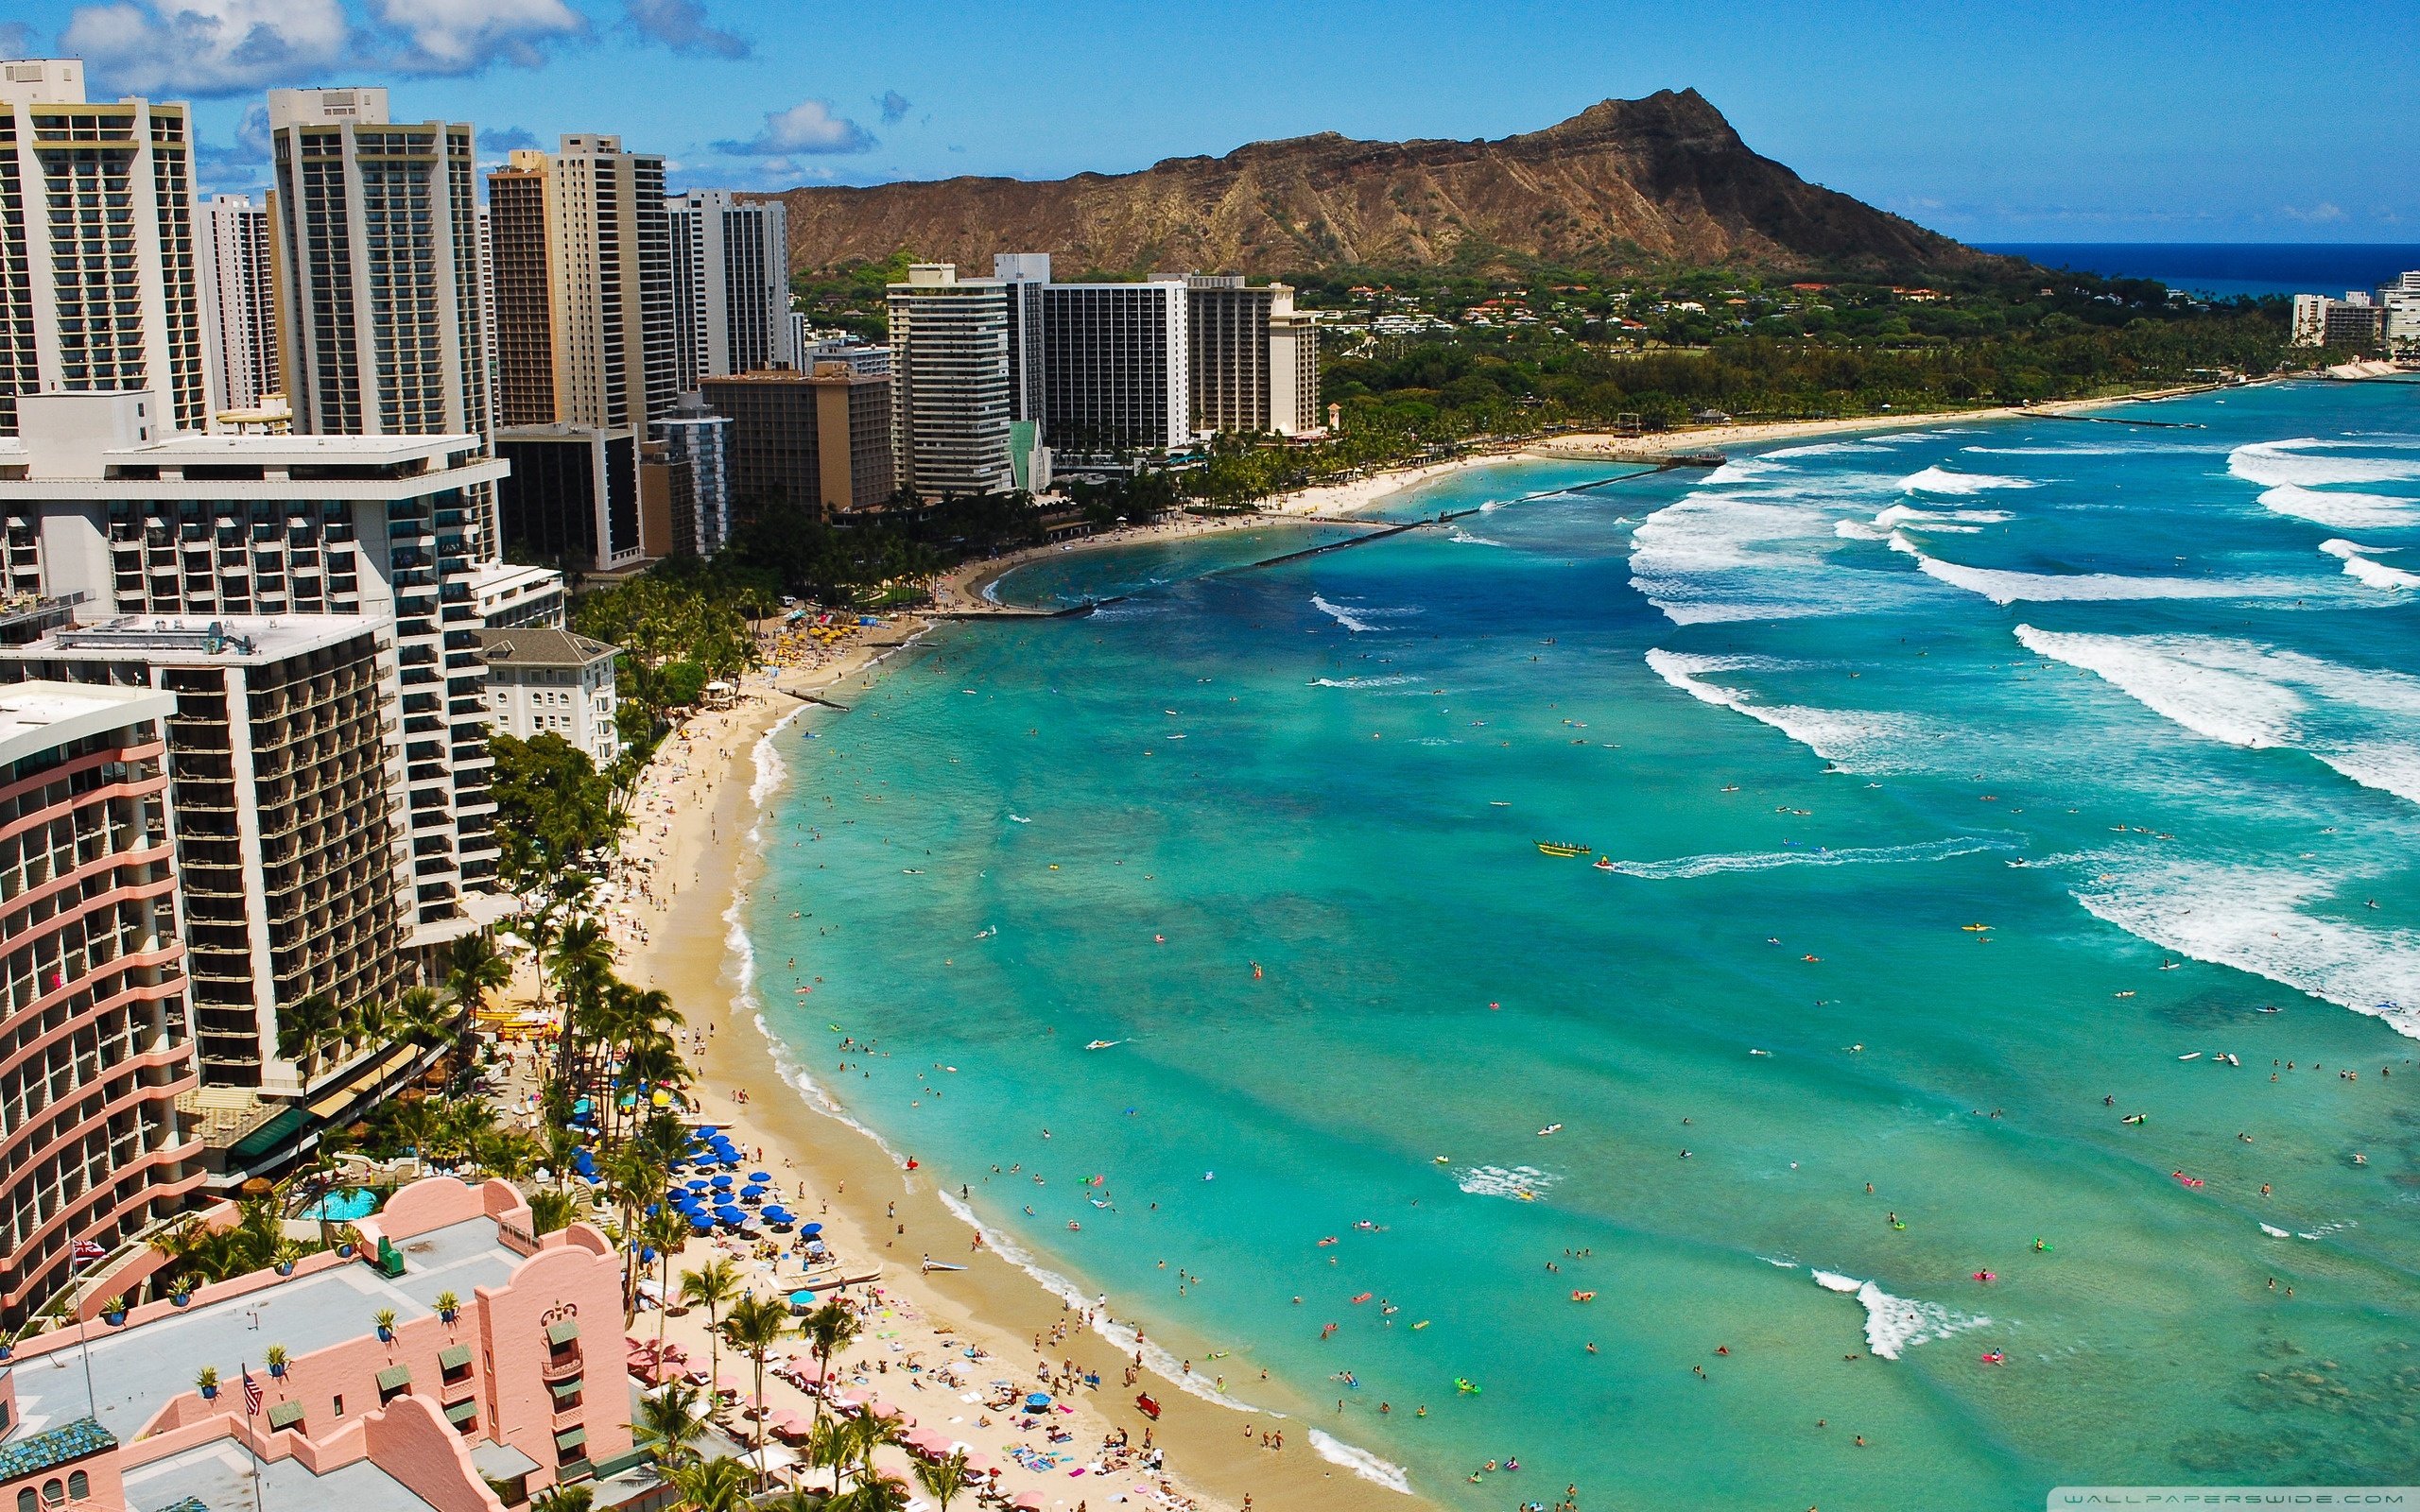 Suites In Waikiki A Division Of Starts International Hawaii Inc